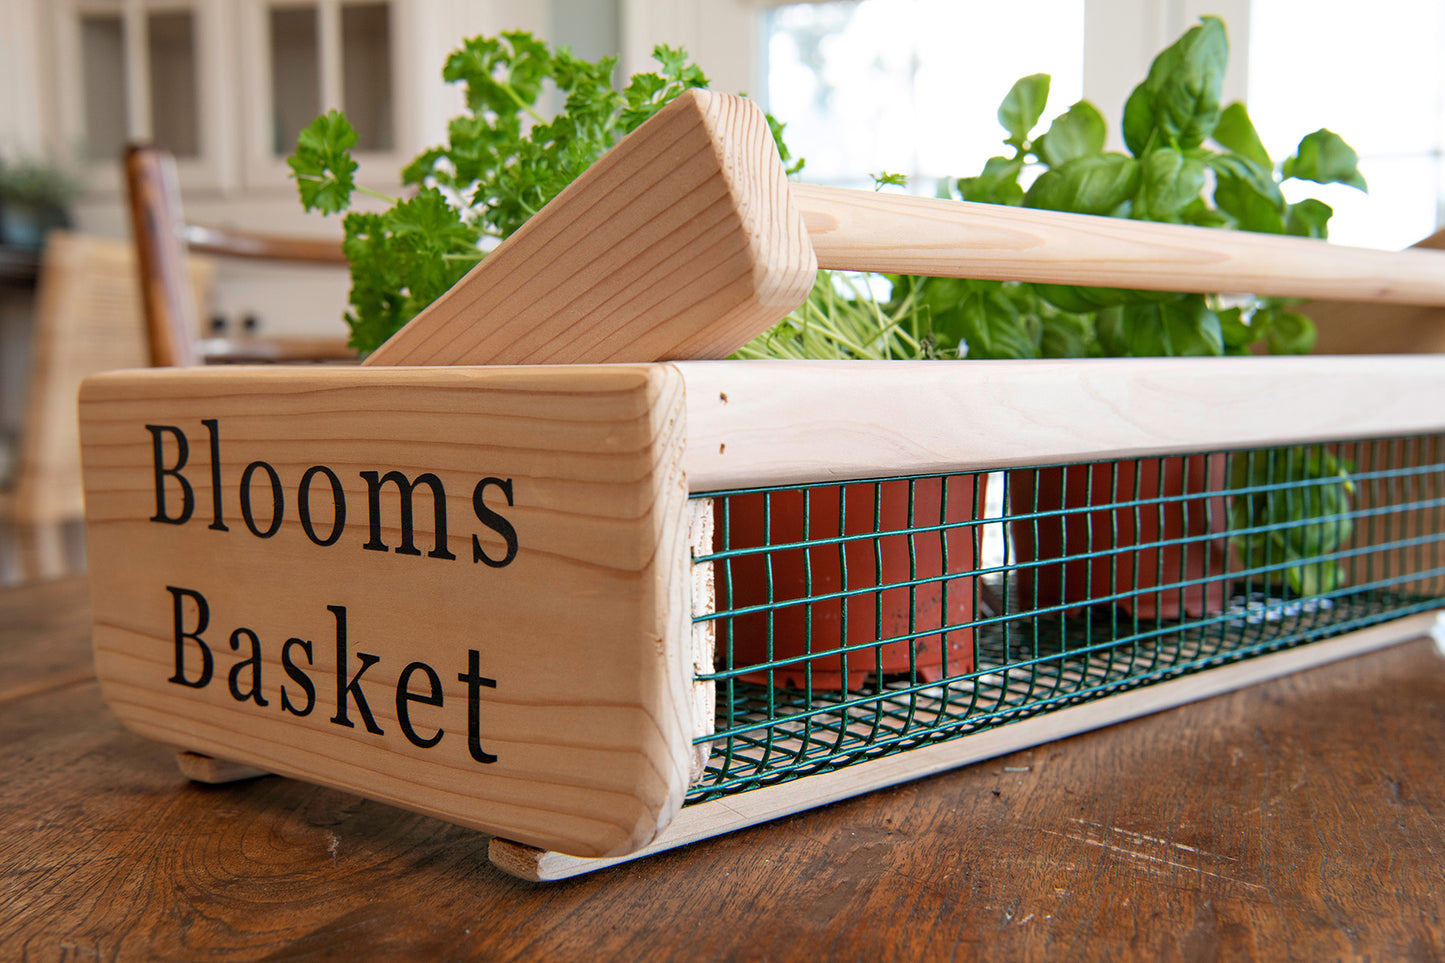 Blooms Basket Garden Carrier